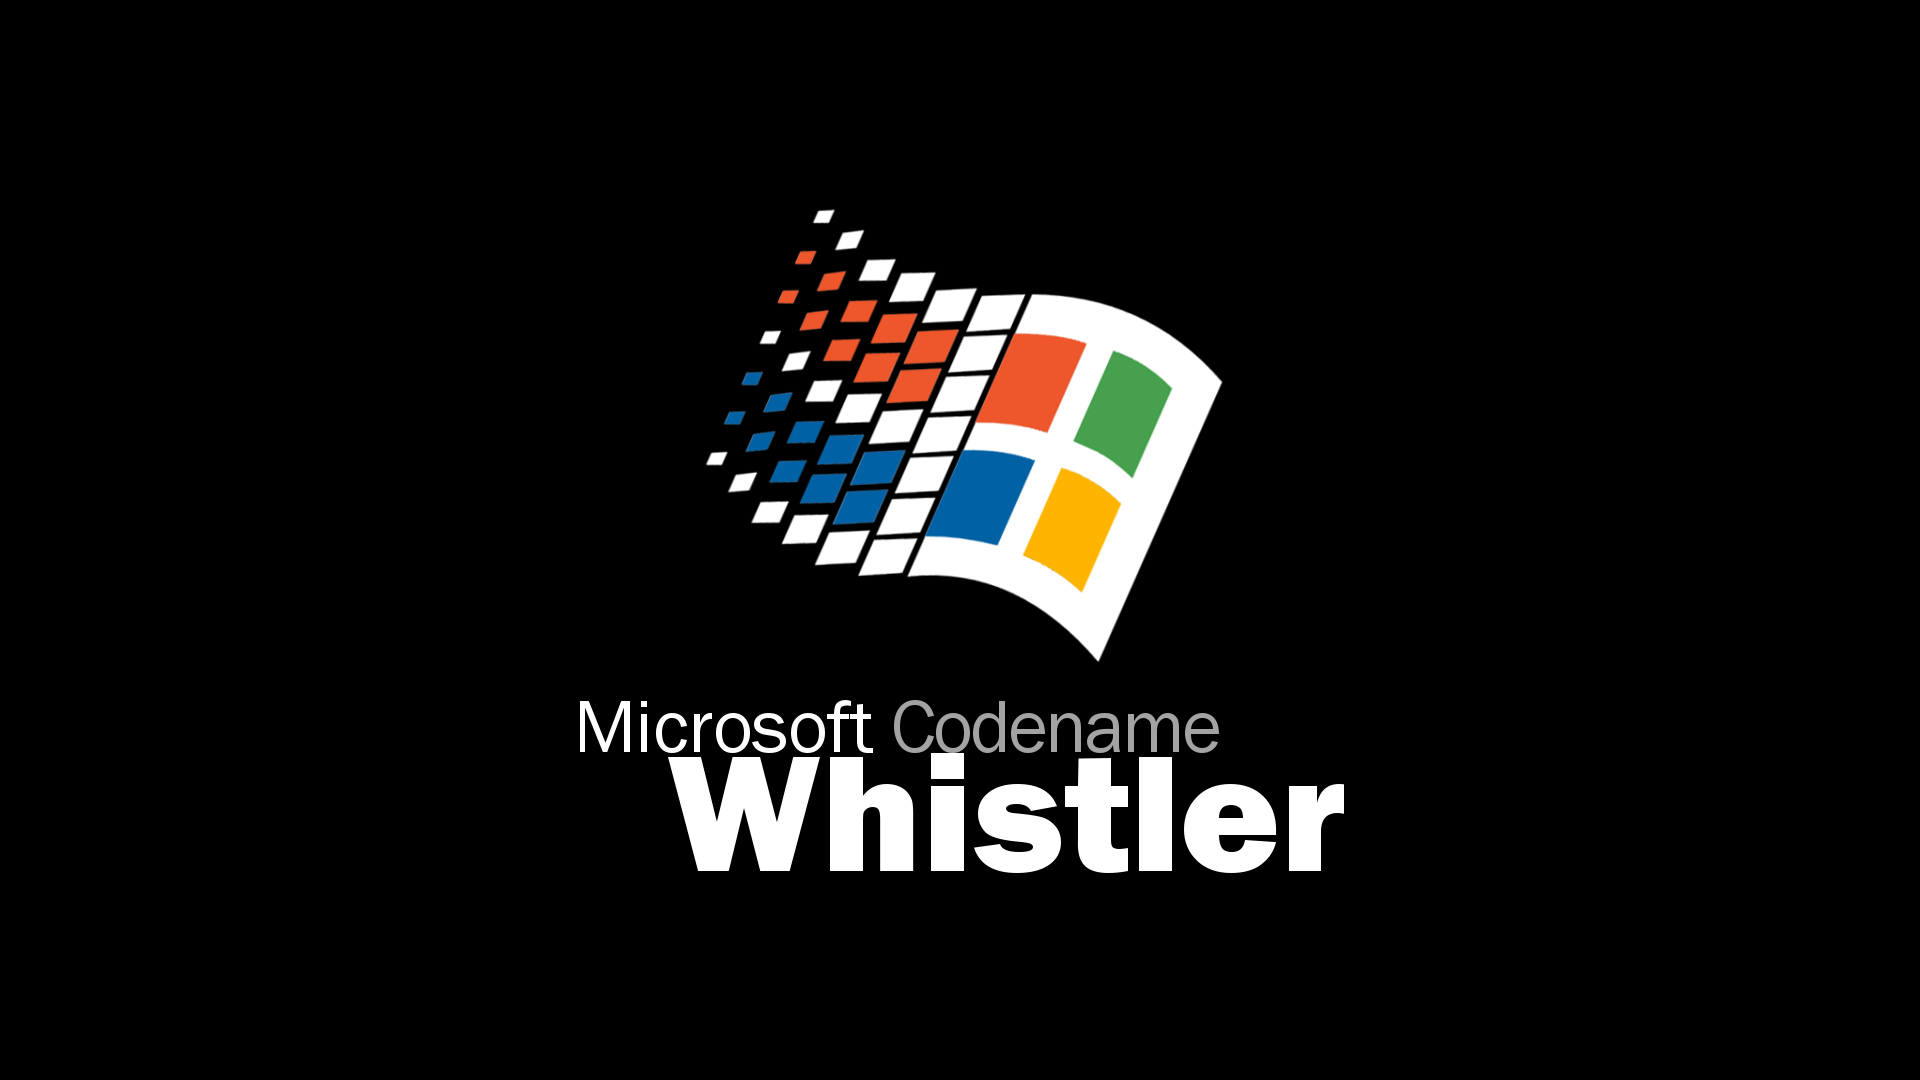 Microsoft Codename Windows Whistler Wallpaper